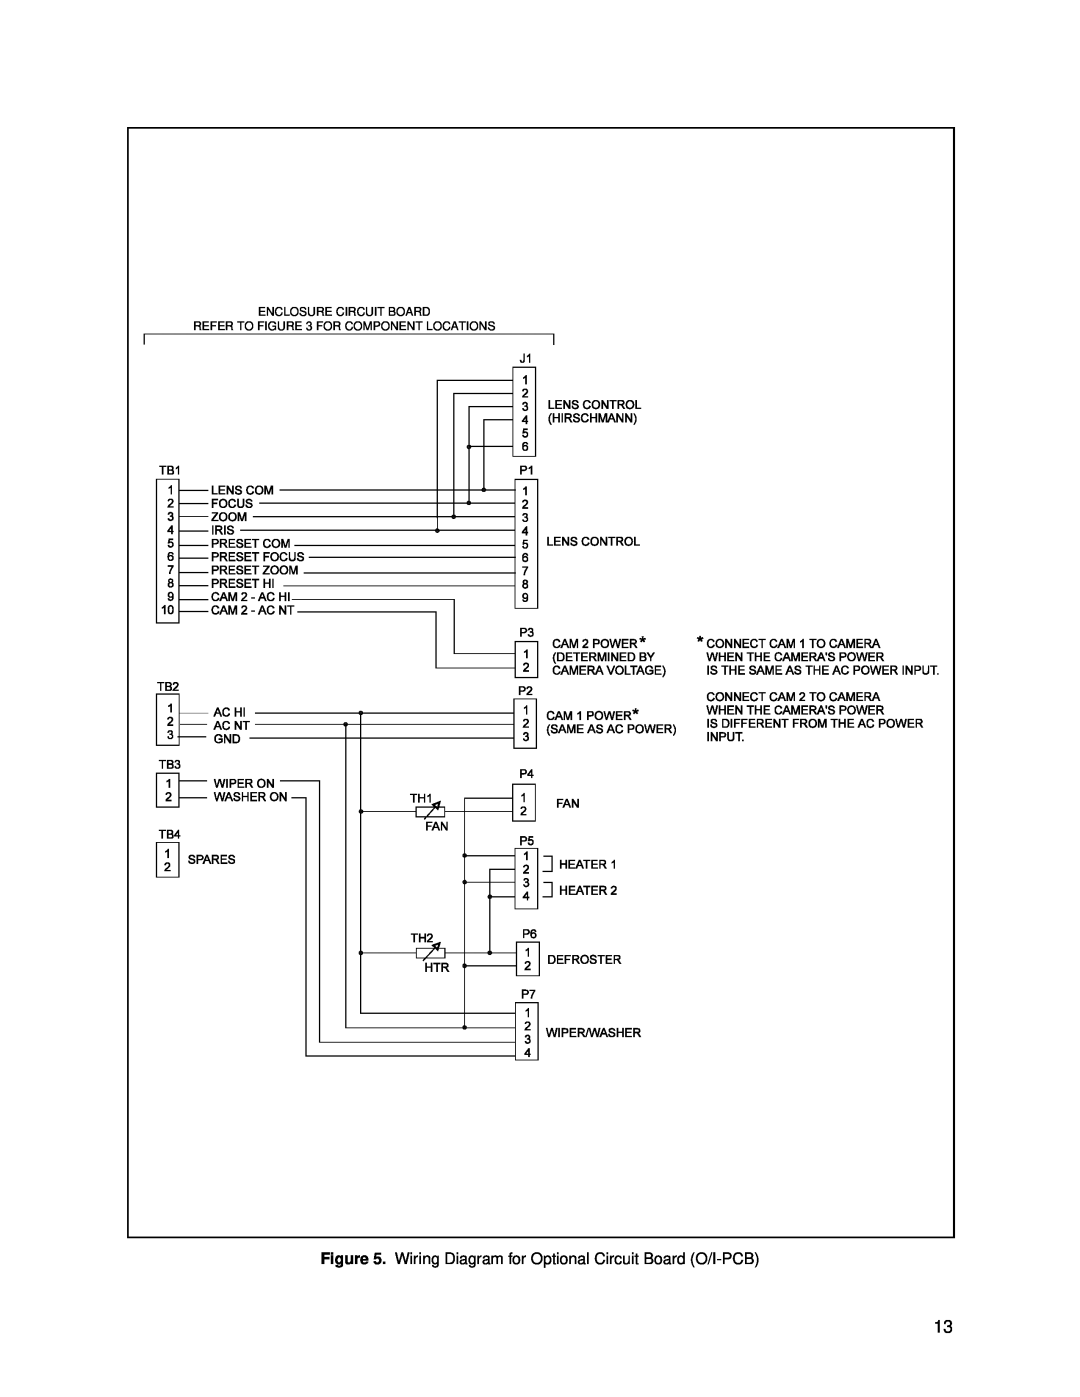 Bosch Appliances tc9346a instruction manual Wiring Diagram for Optional Circuit Board O/I-PCB, Enclosure Circuit Board 